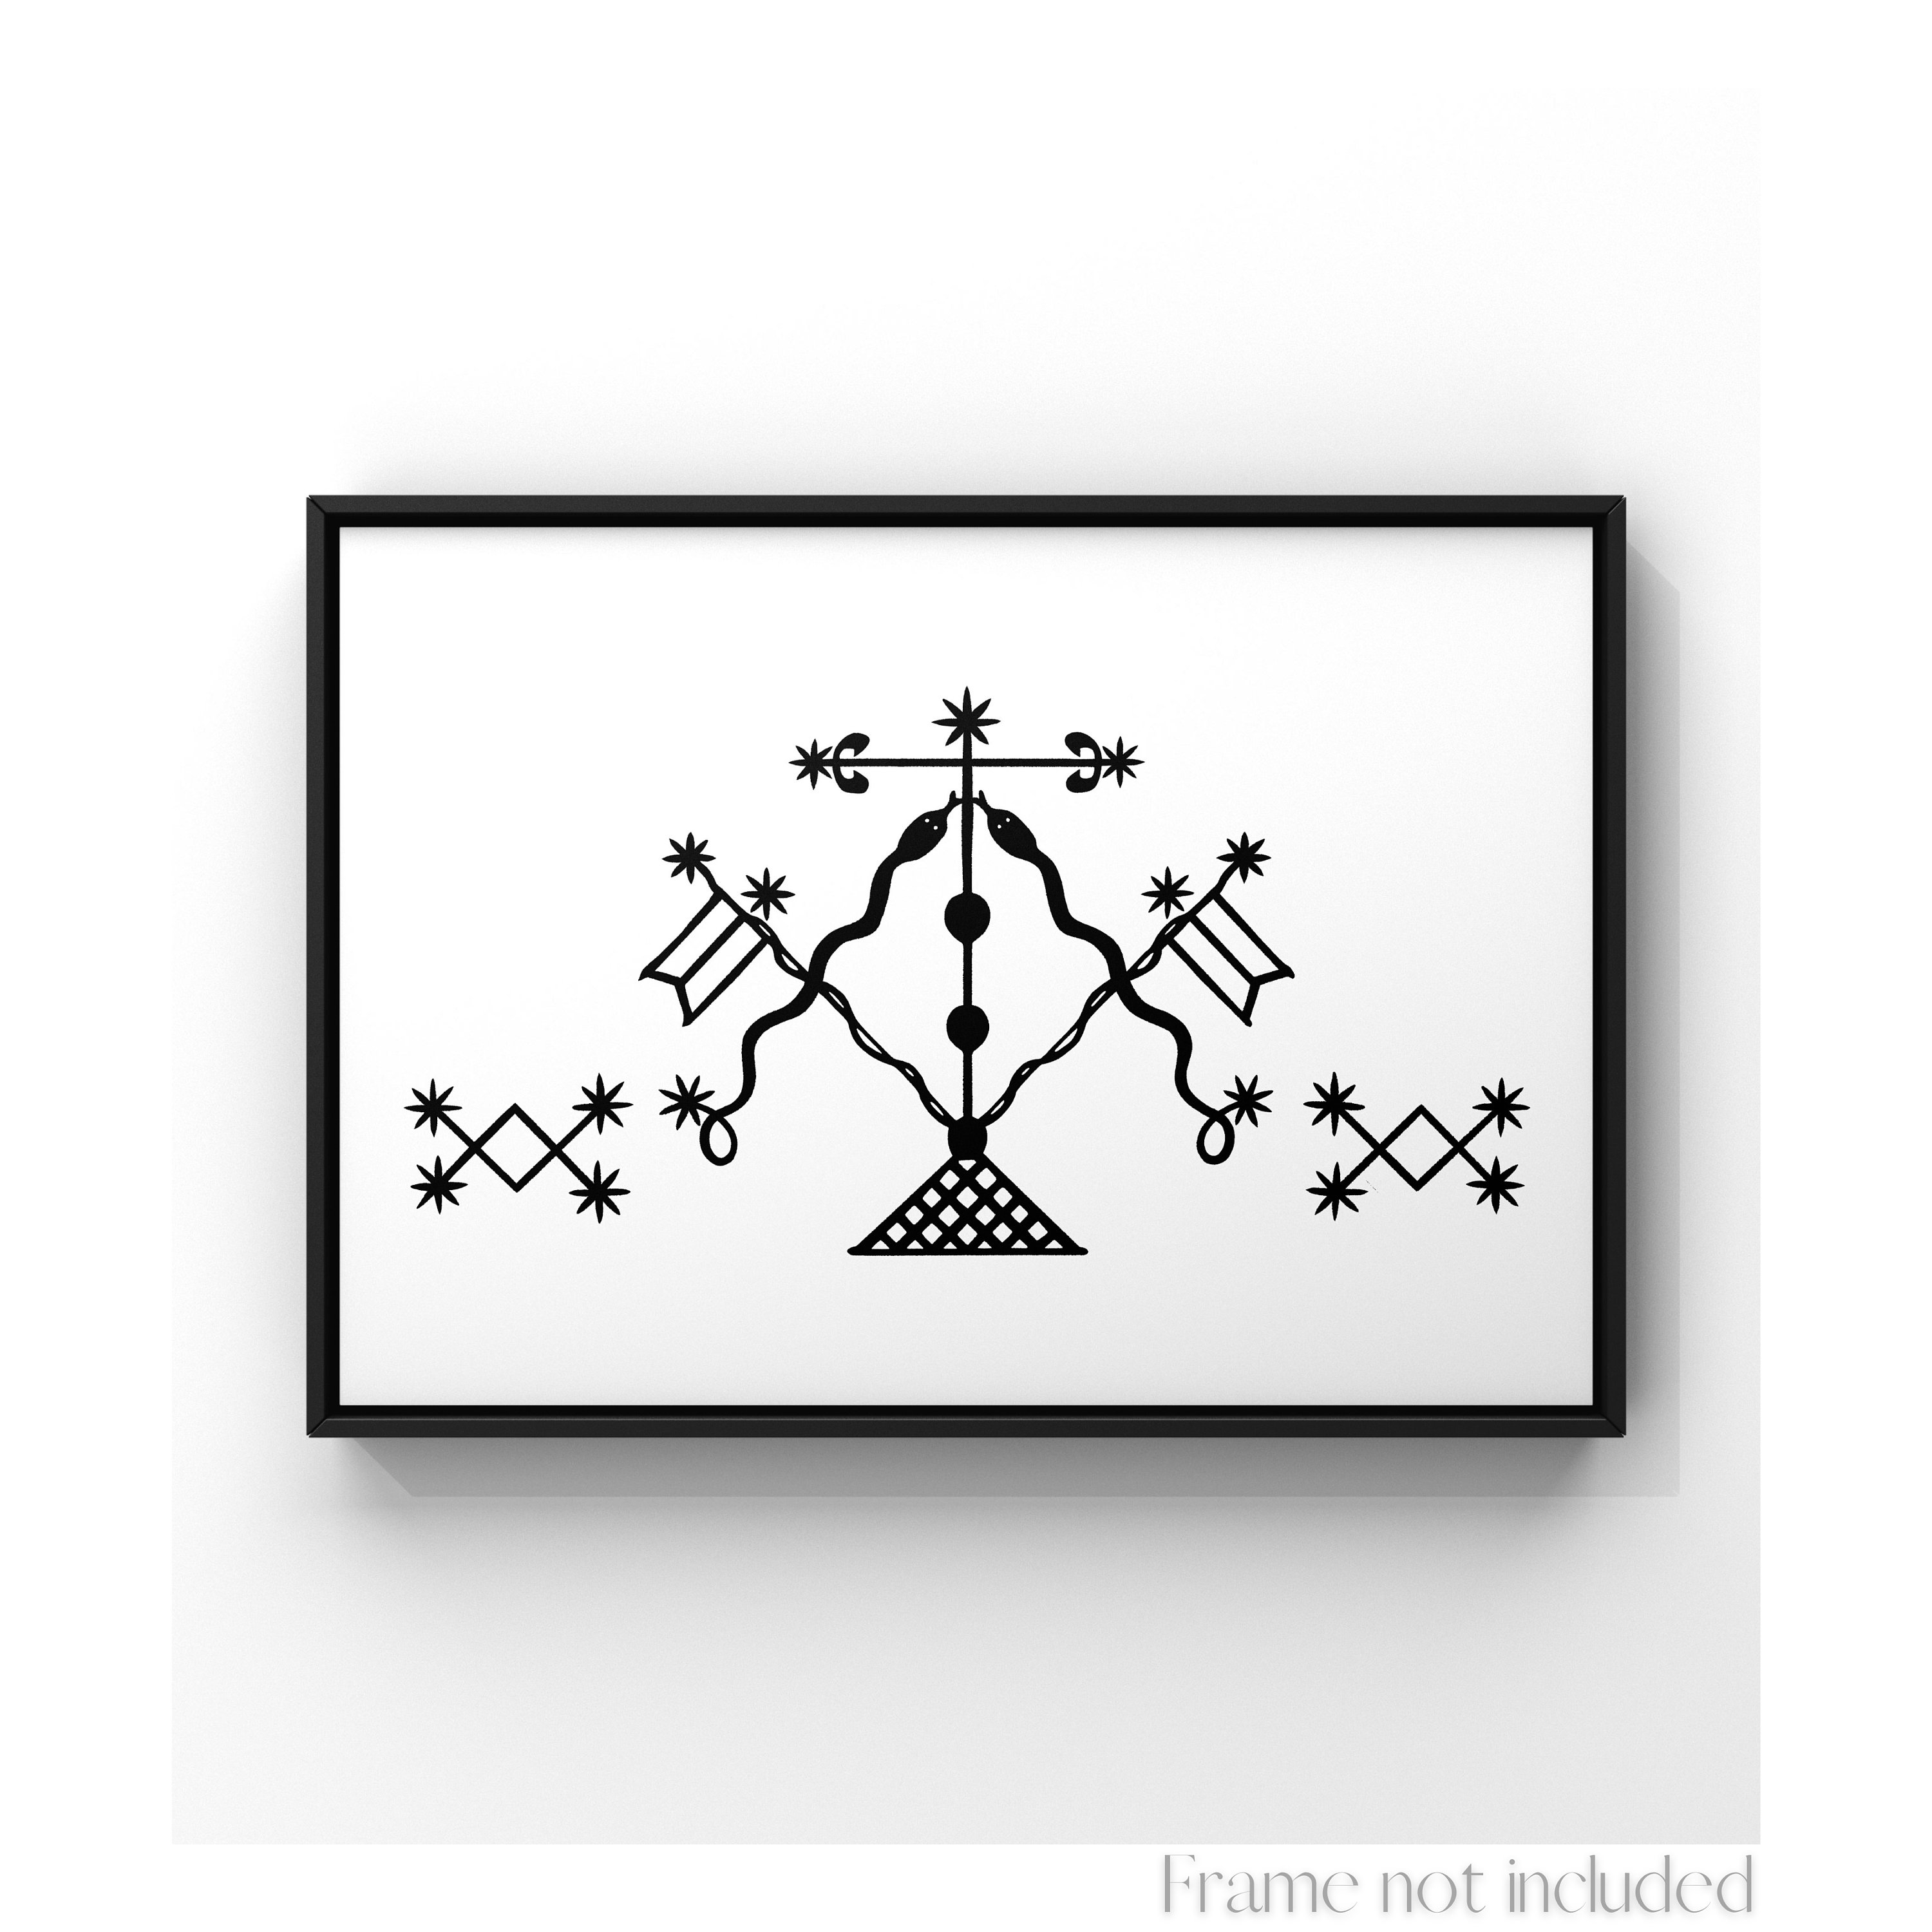 voodoo symbols and spells